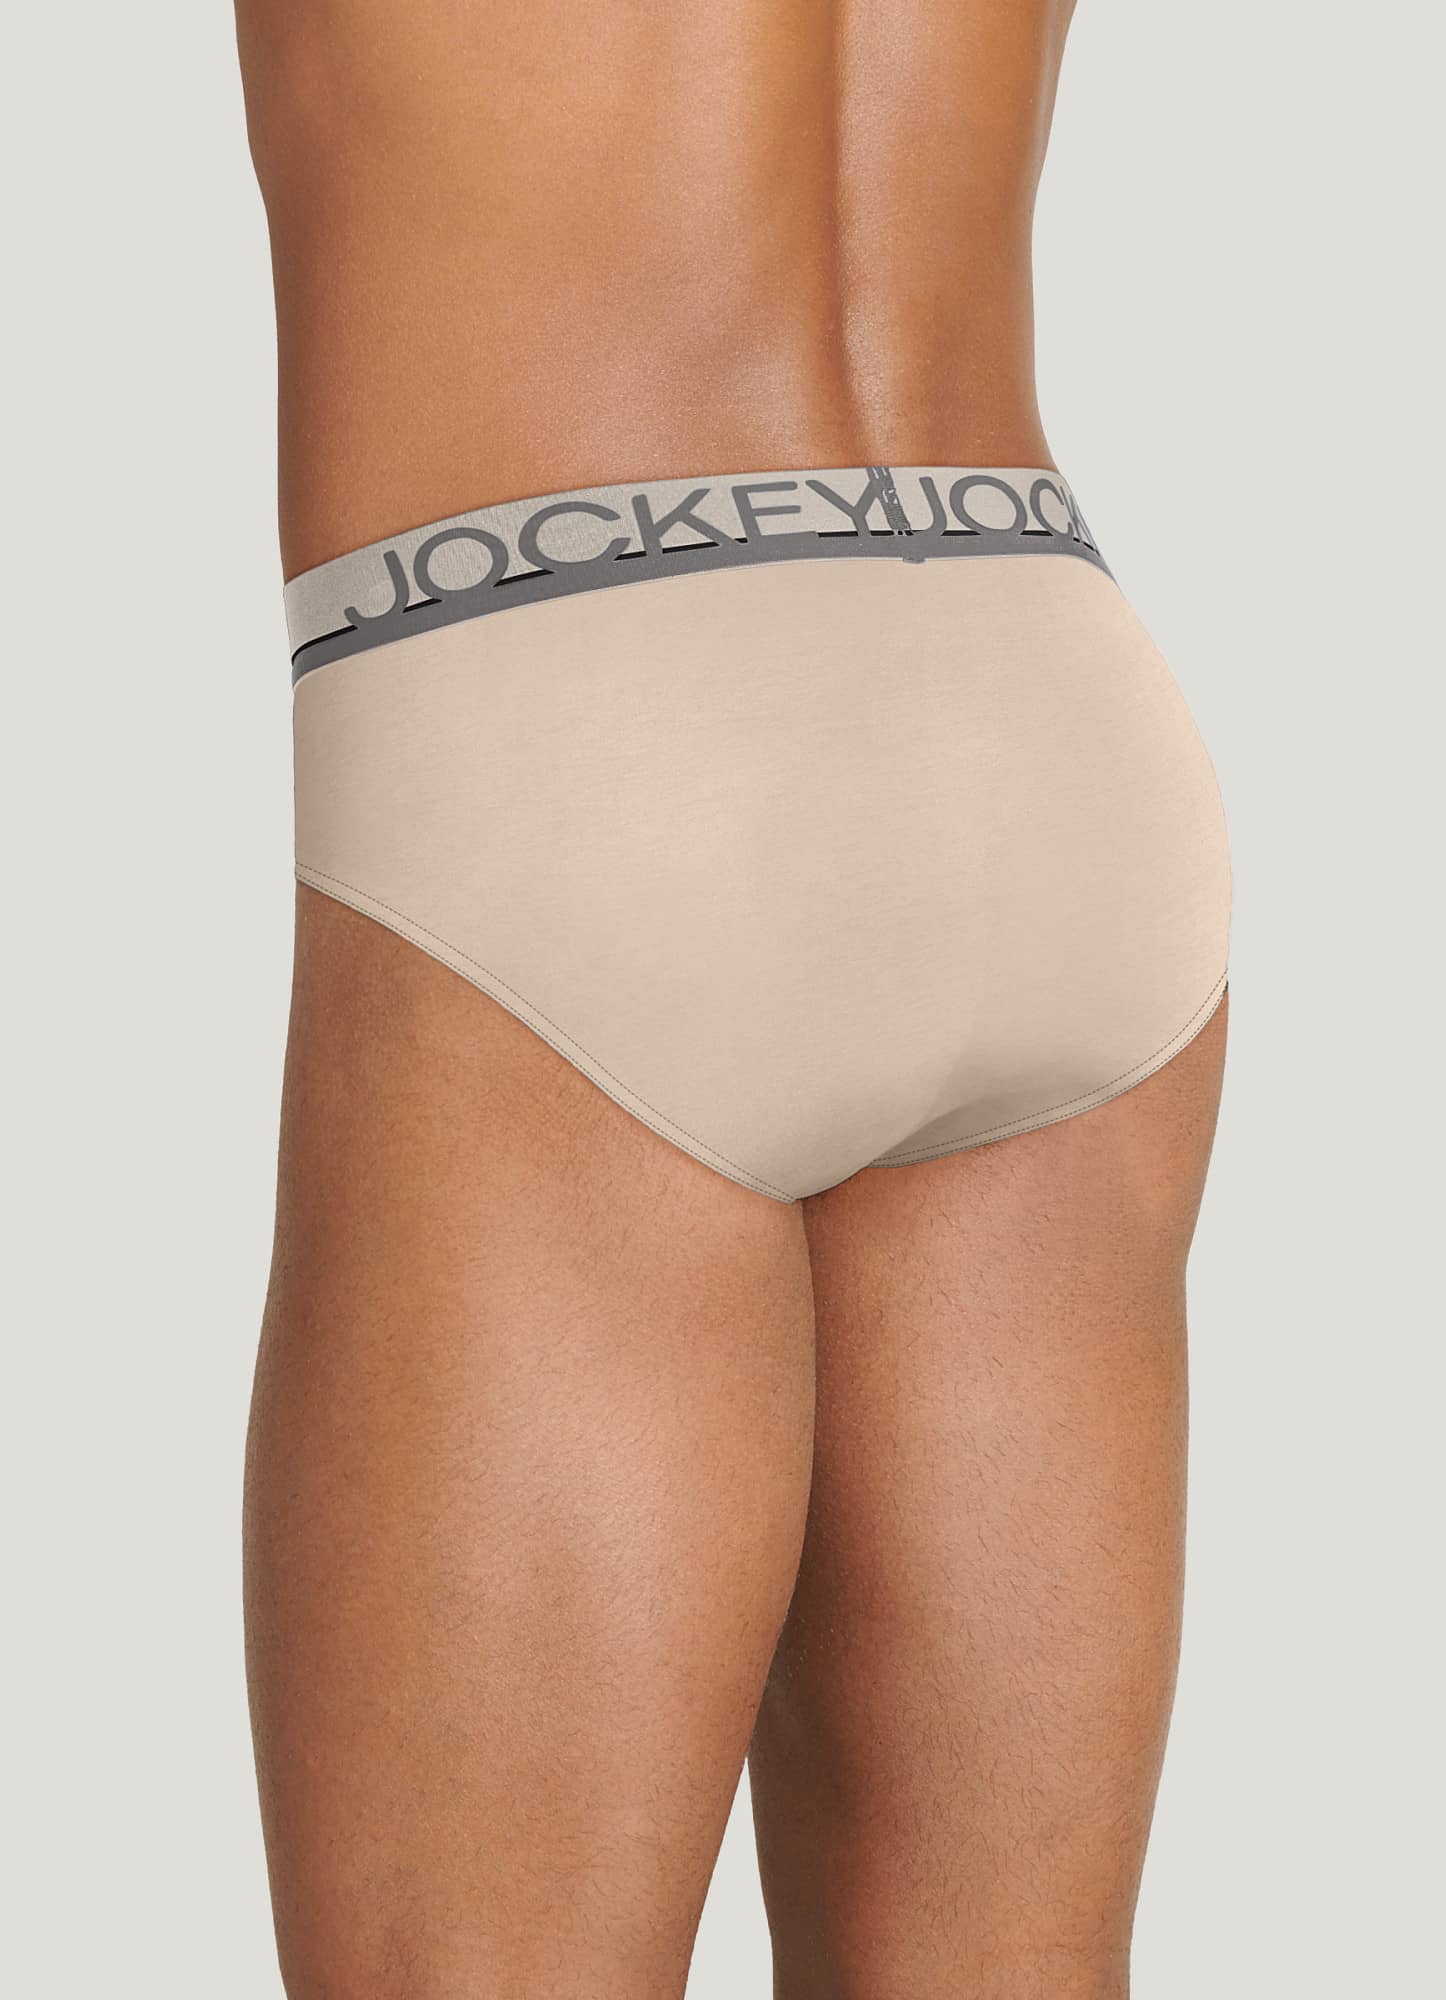 Spdoo 3 Pack Women's High Waisted Cotton Underwear Soft Breathable Panties  Stretch Briefs Regular & Plus Size